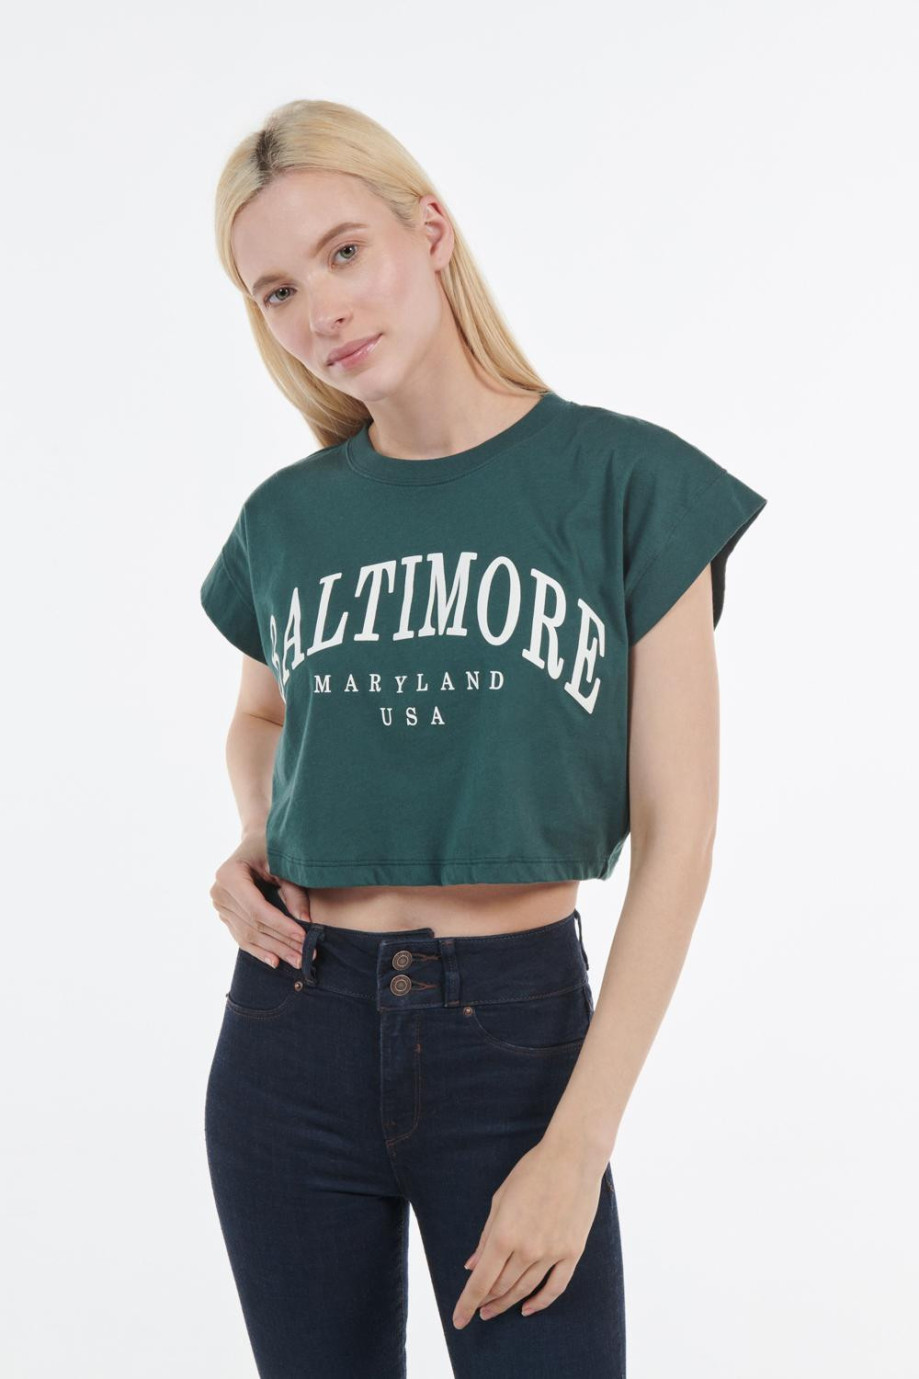 Camiseta oversize crop top unicolor con diseño de texto college en frente